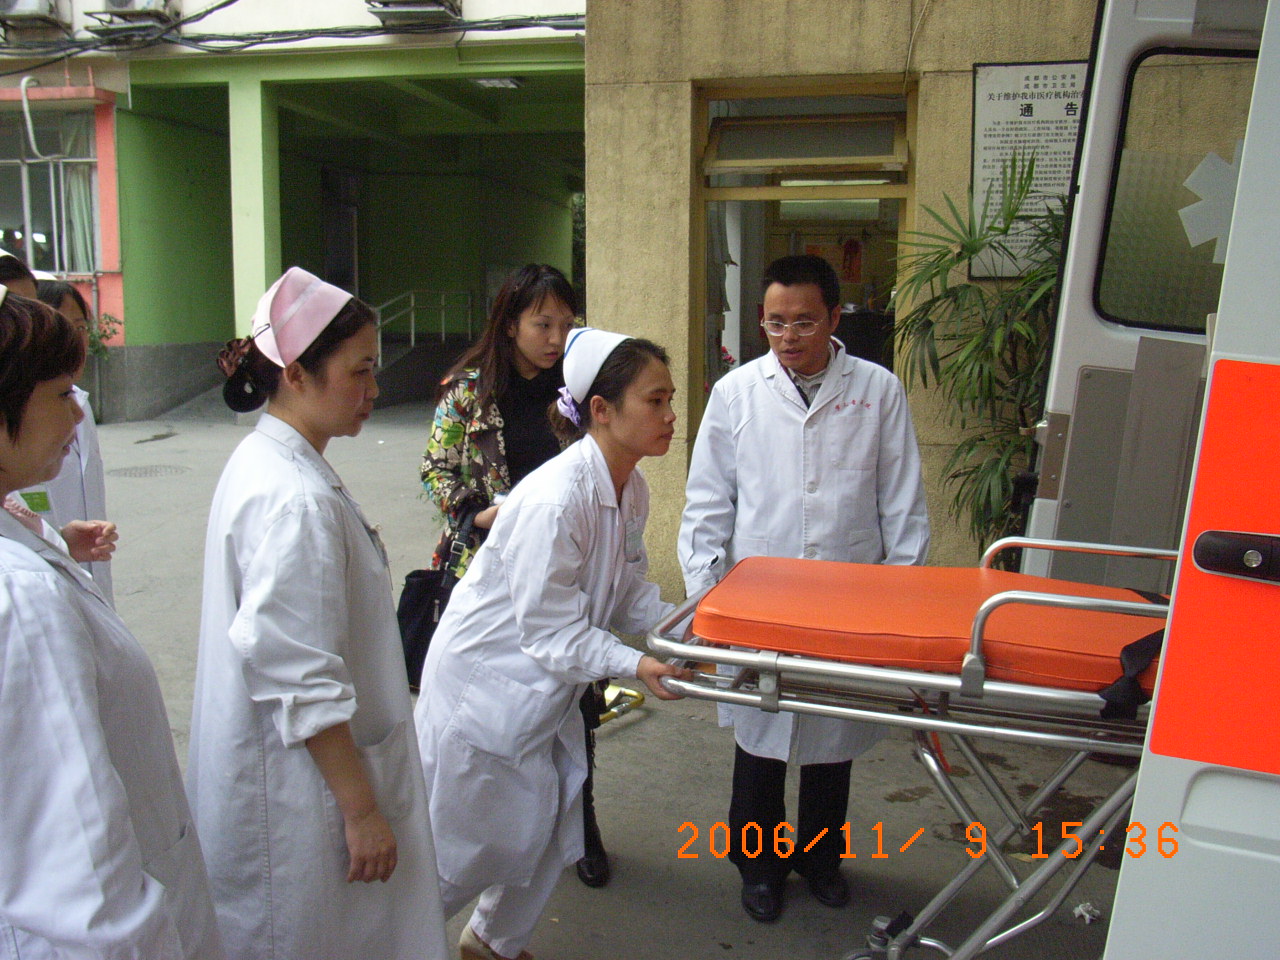 Medical students loading empty stretcher into ambulance